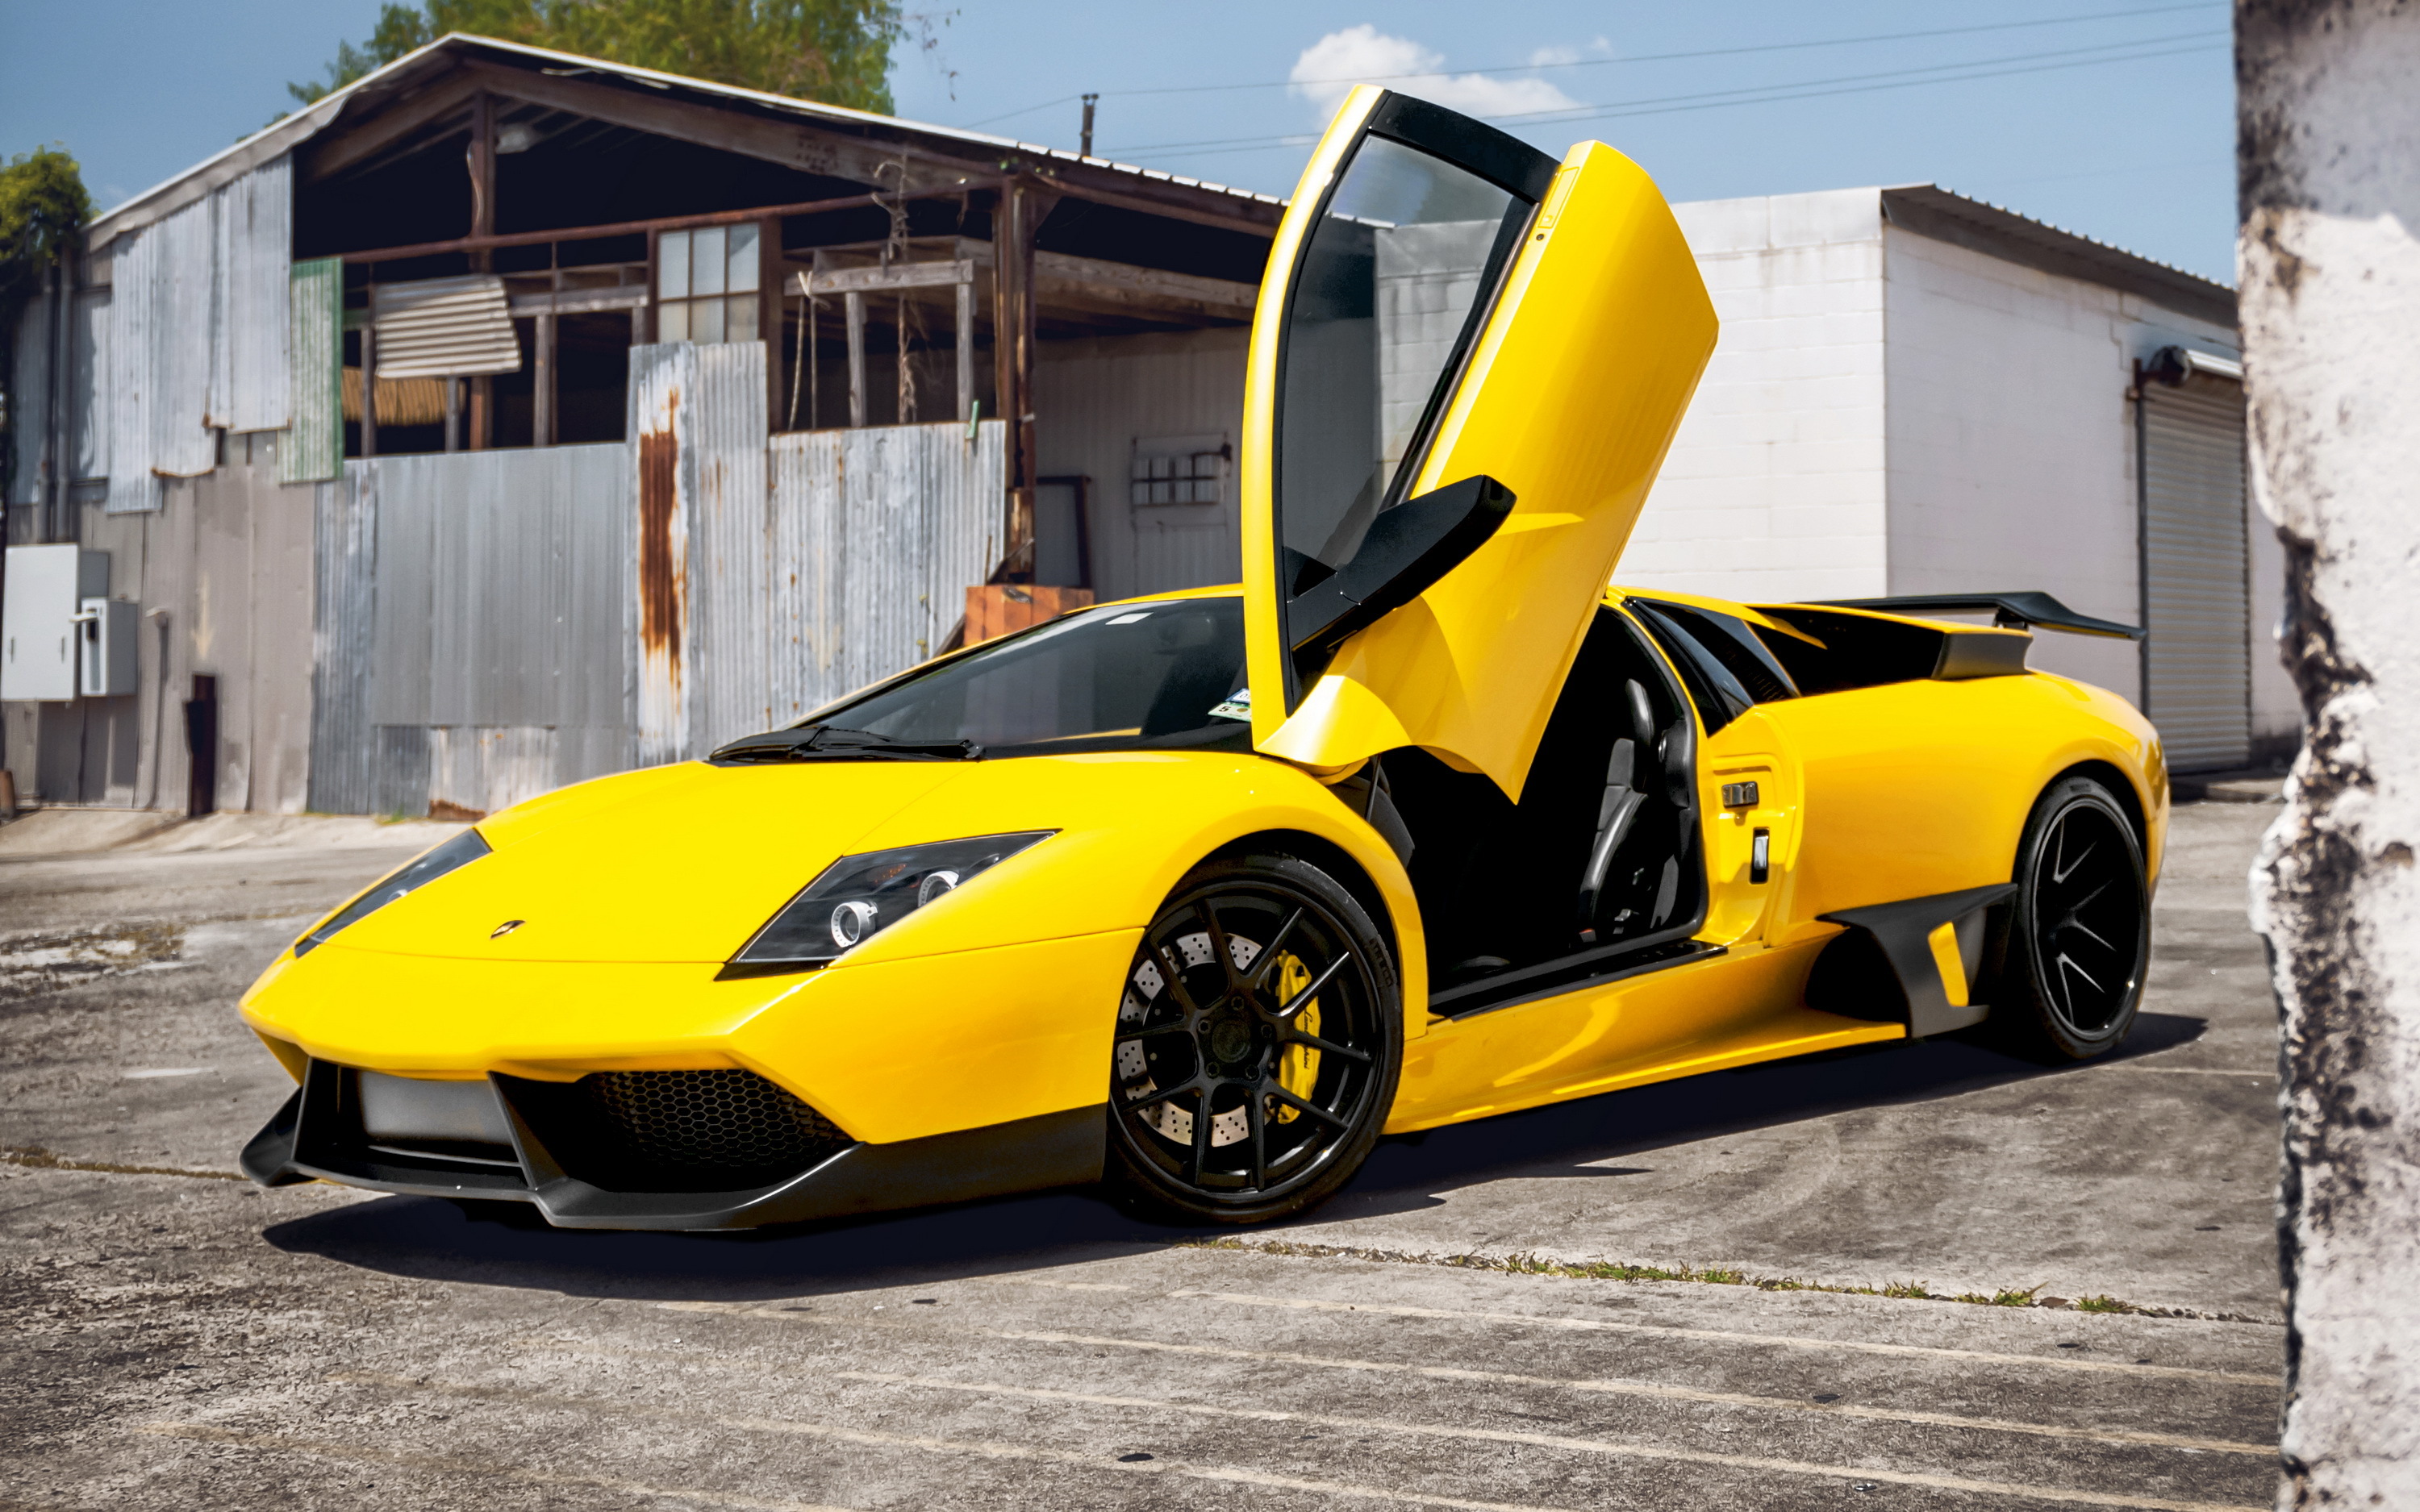 36+] Yellow Lamborghini Murcielago Wallpaper - WallpaperSafari